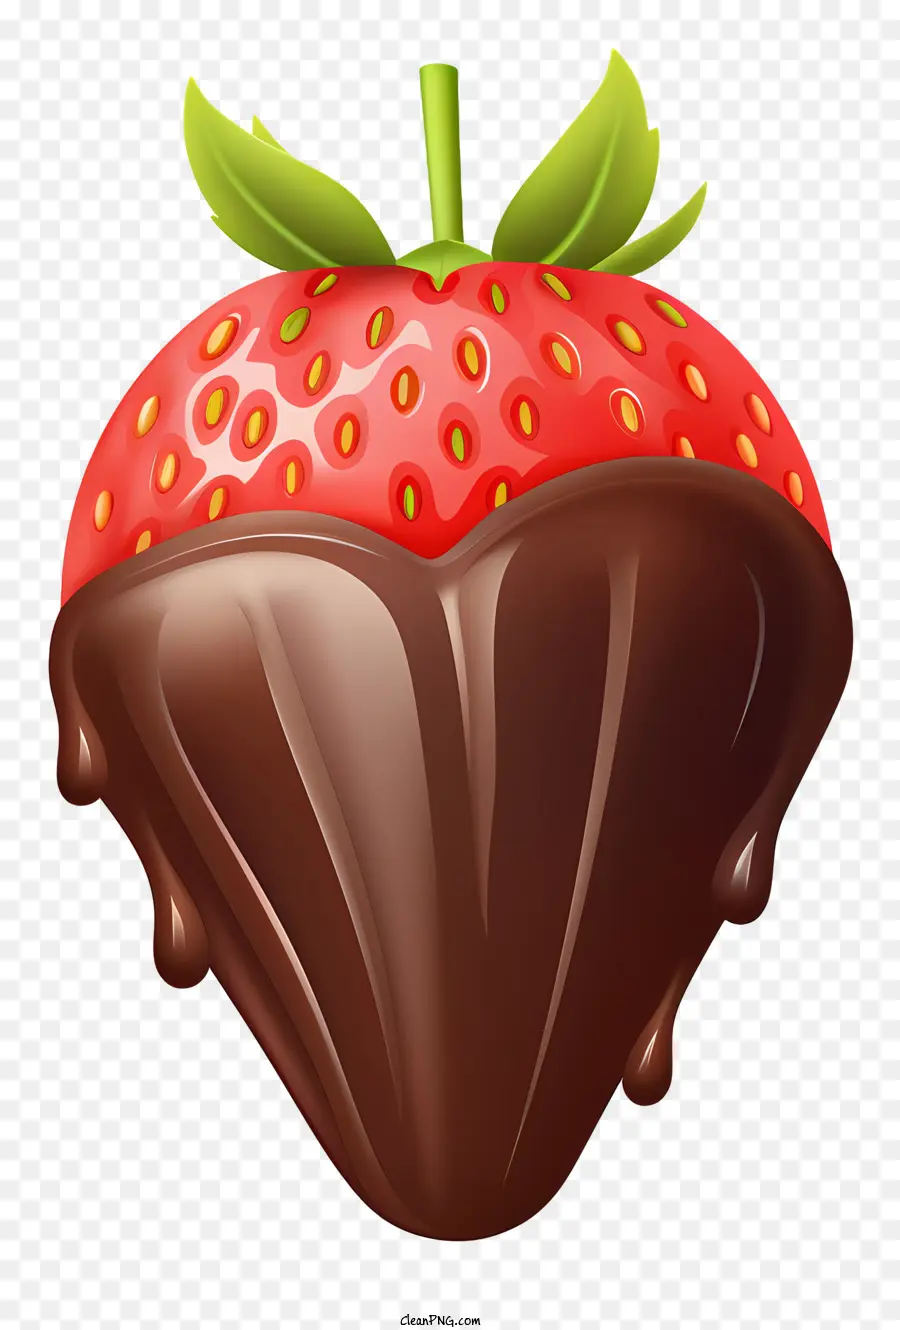 chocolate covered strawberry chocolate sauce melted chocolate strawberry with chocolate leaf or stem on strawberry